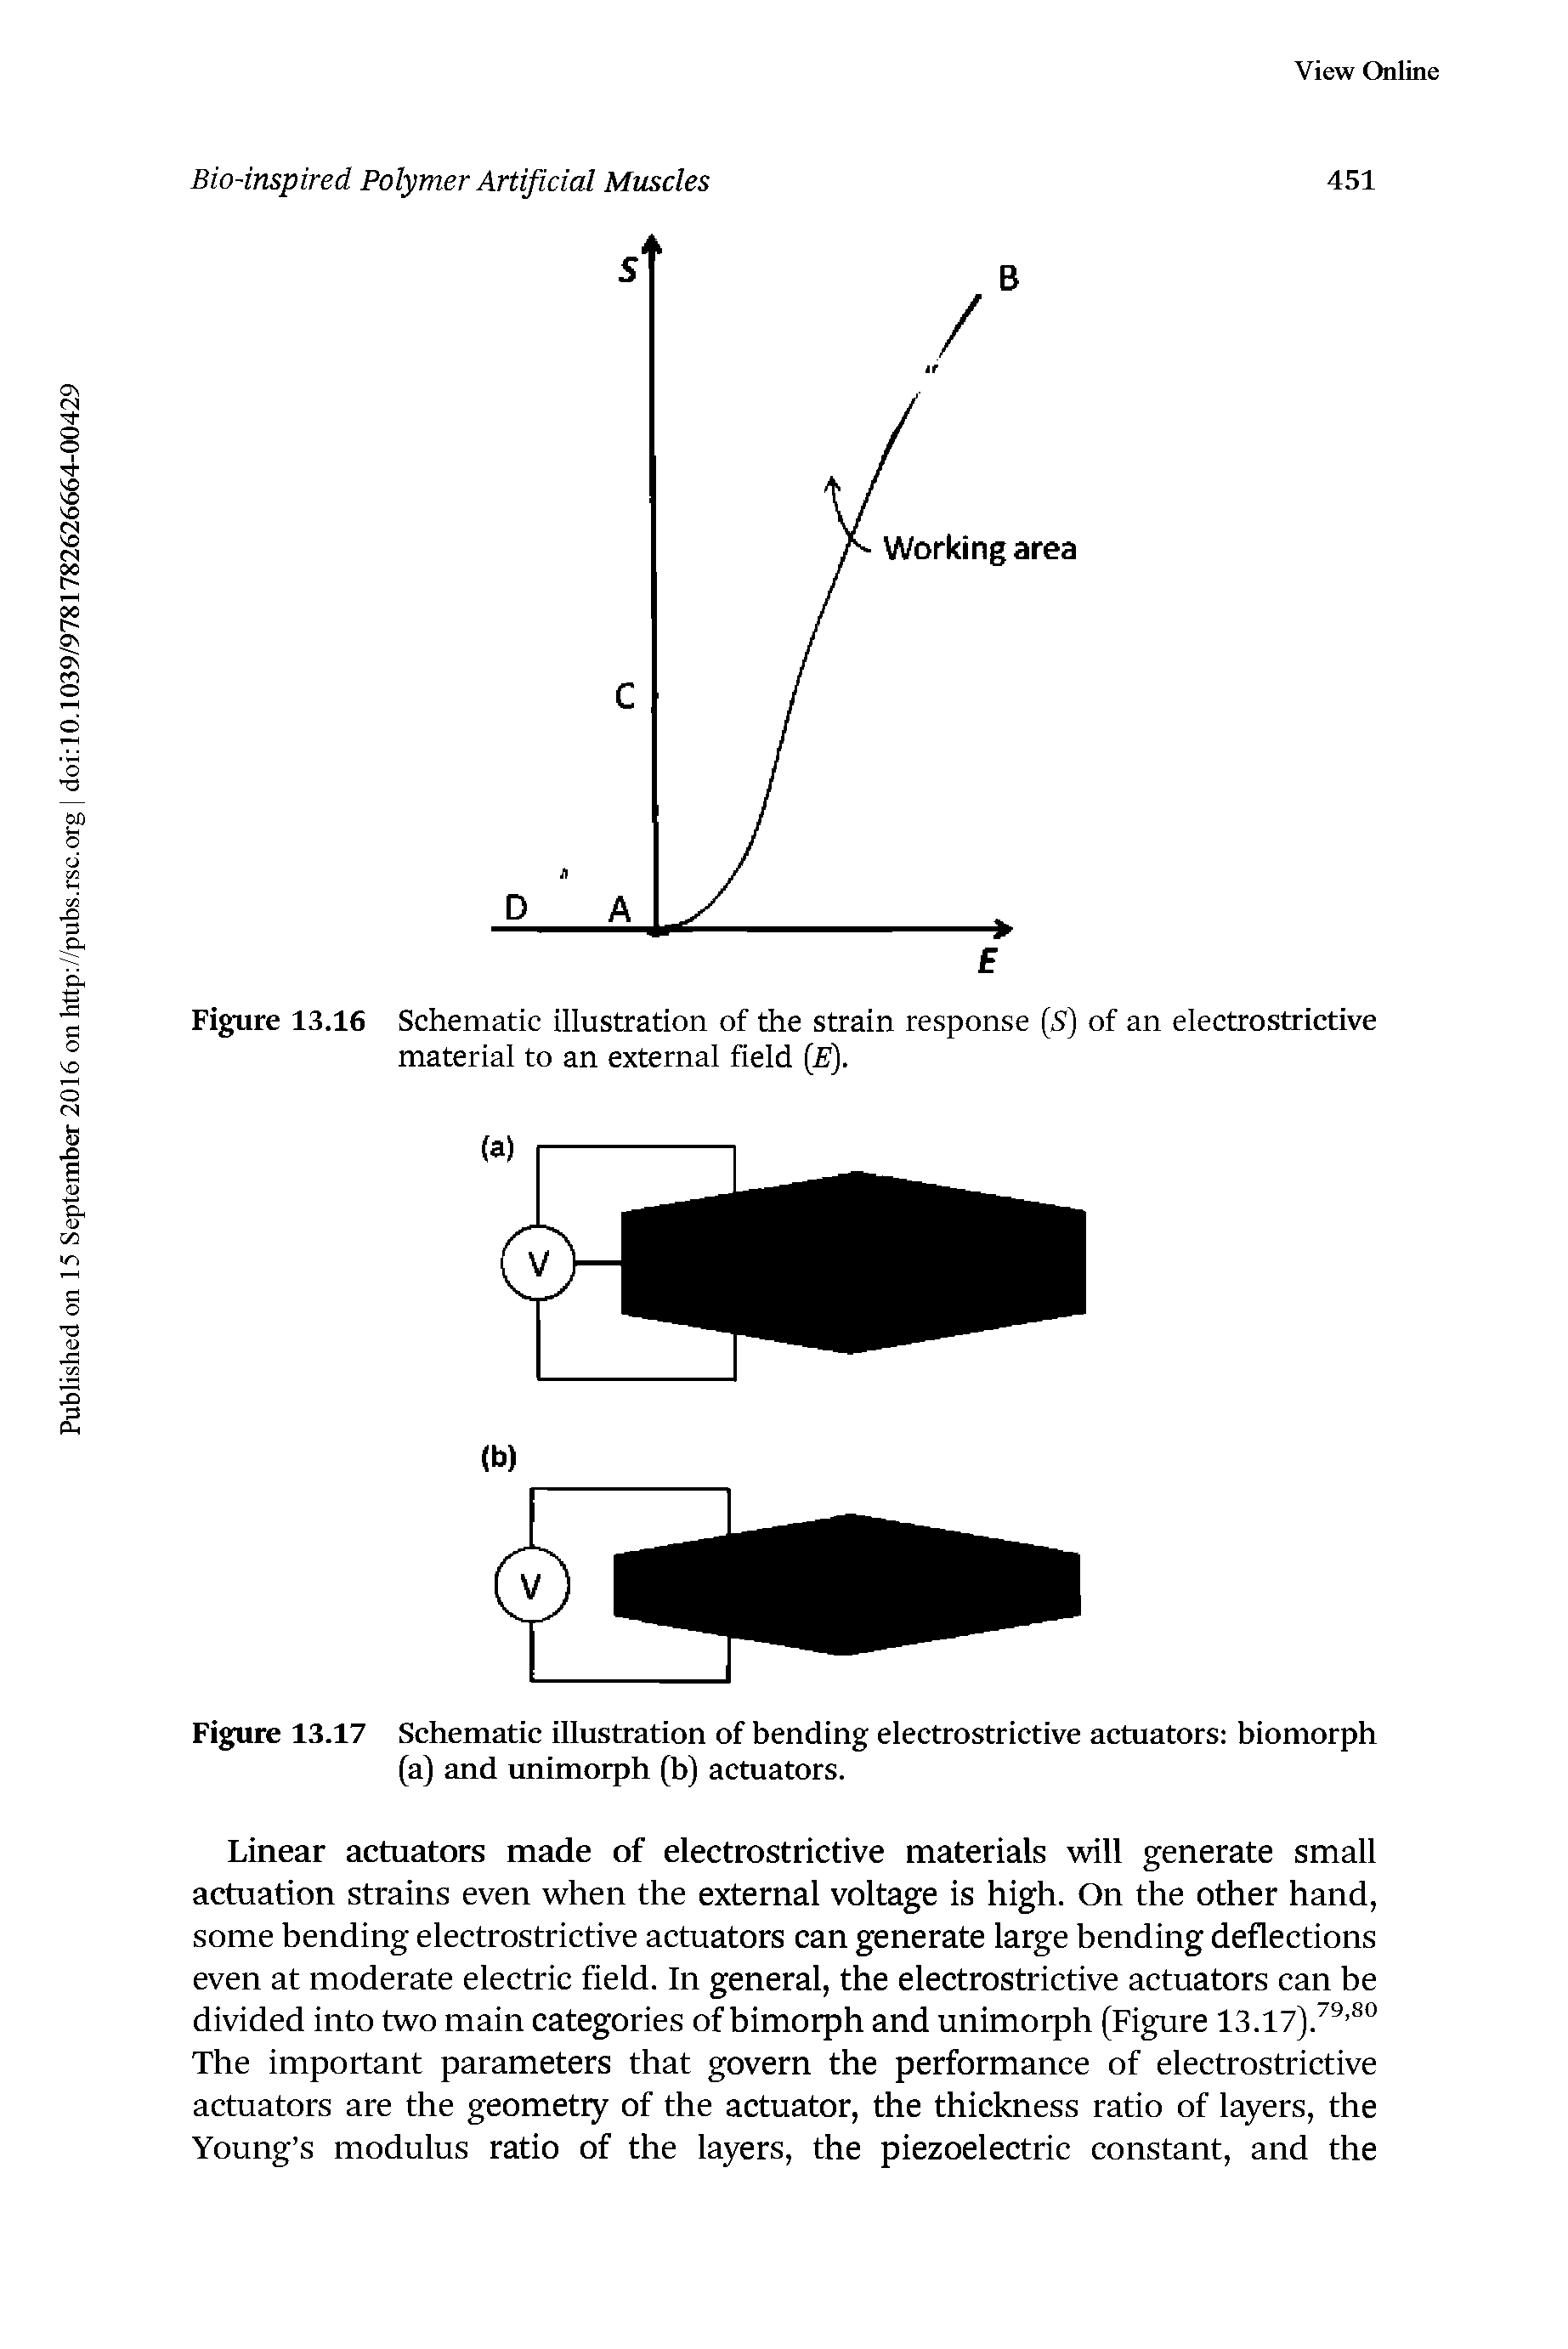 Figure 13.17 Schematic illustration of bending electrostrictive actuators biomorph (a) and unimorph (b) actuators.